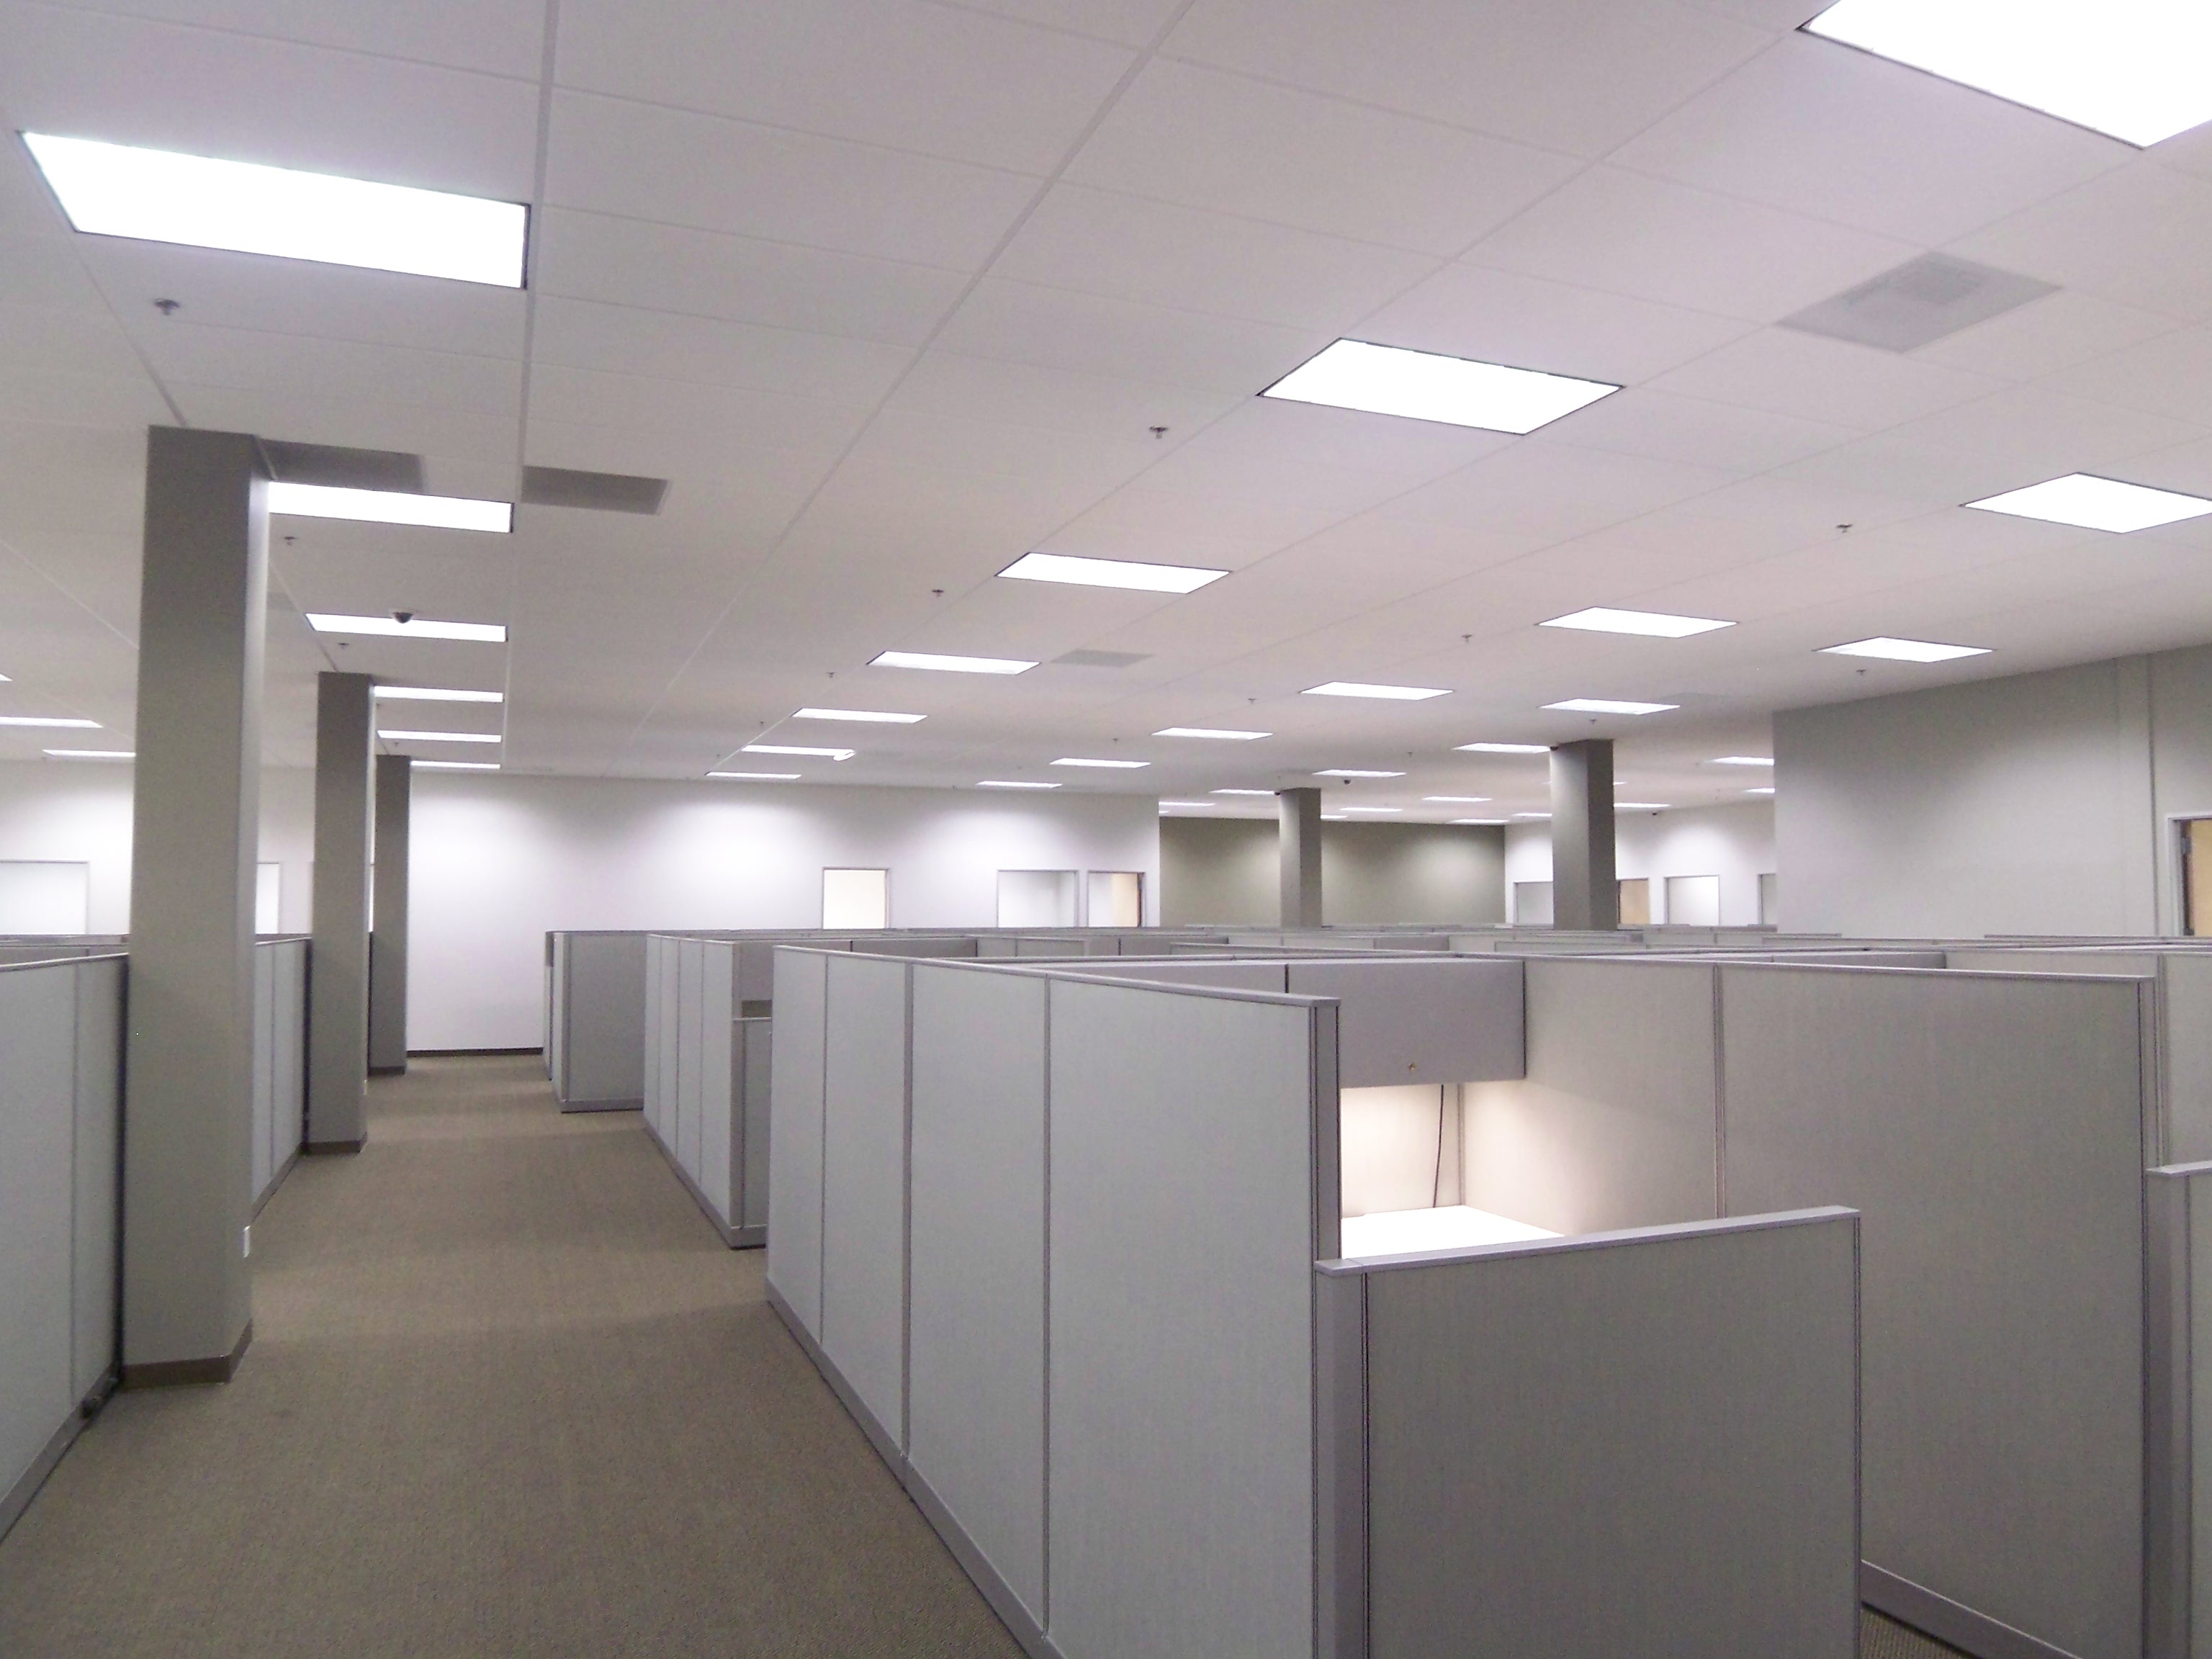 LED Lighting in Office Buildings Savings in the Millions ...